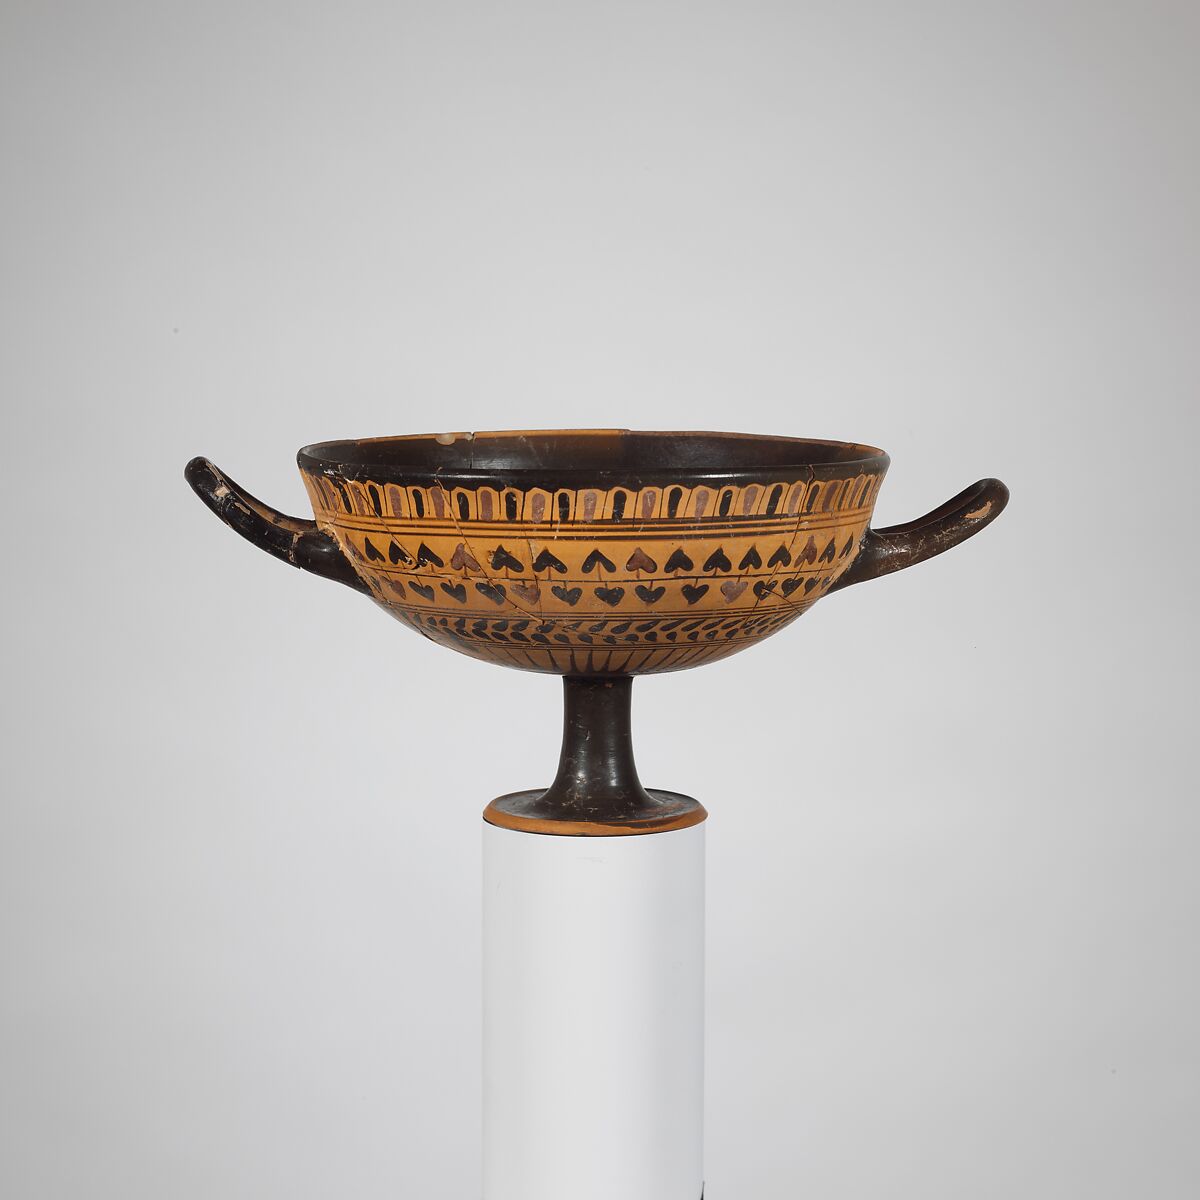 Terracotta kylix: Cassel cup (drinking cup), Terracotta, Greek, Attic 